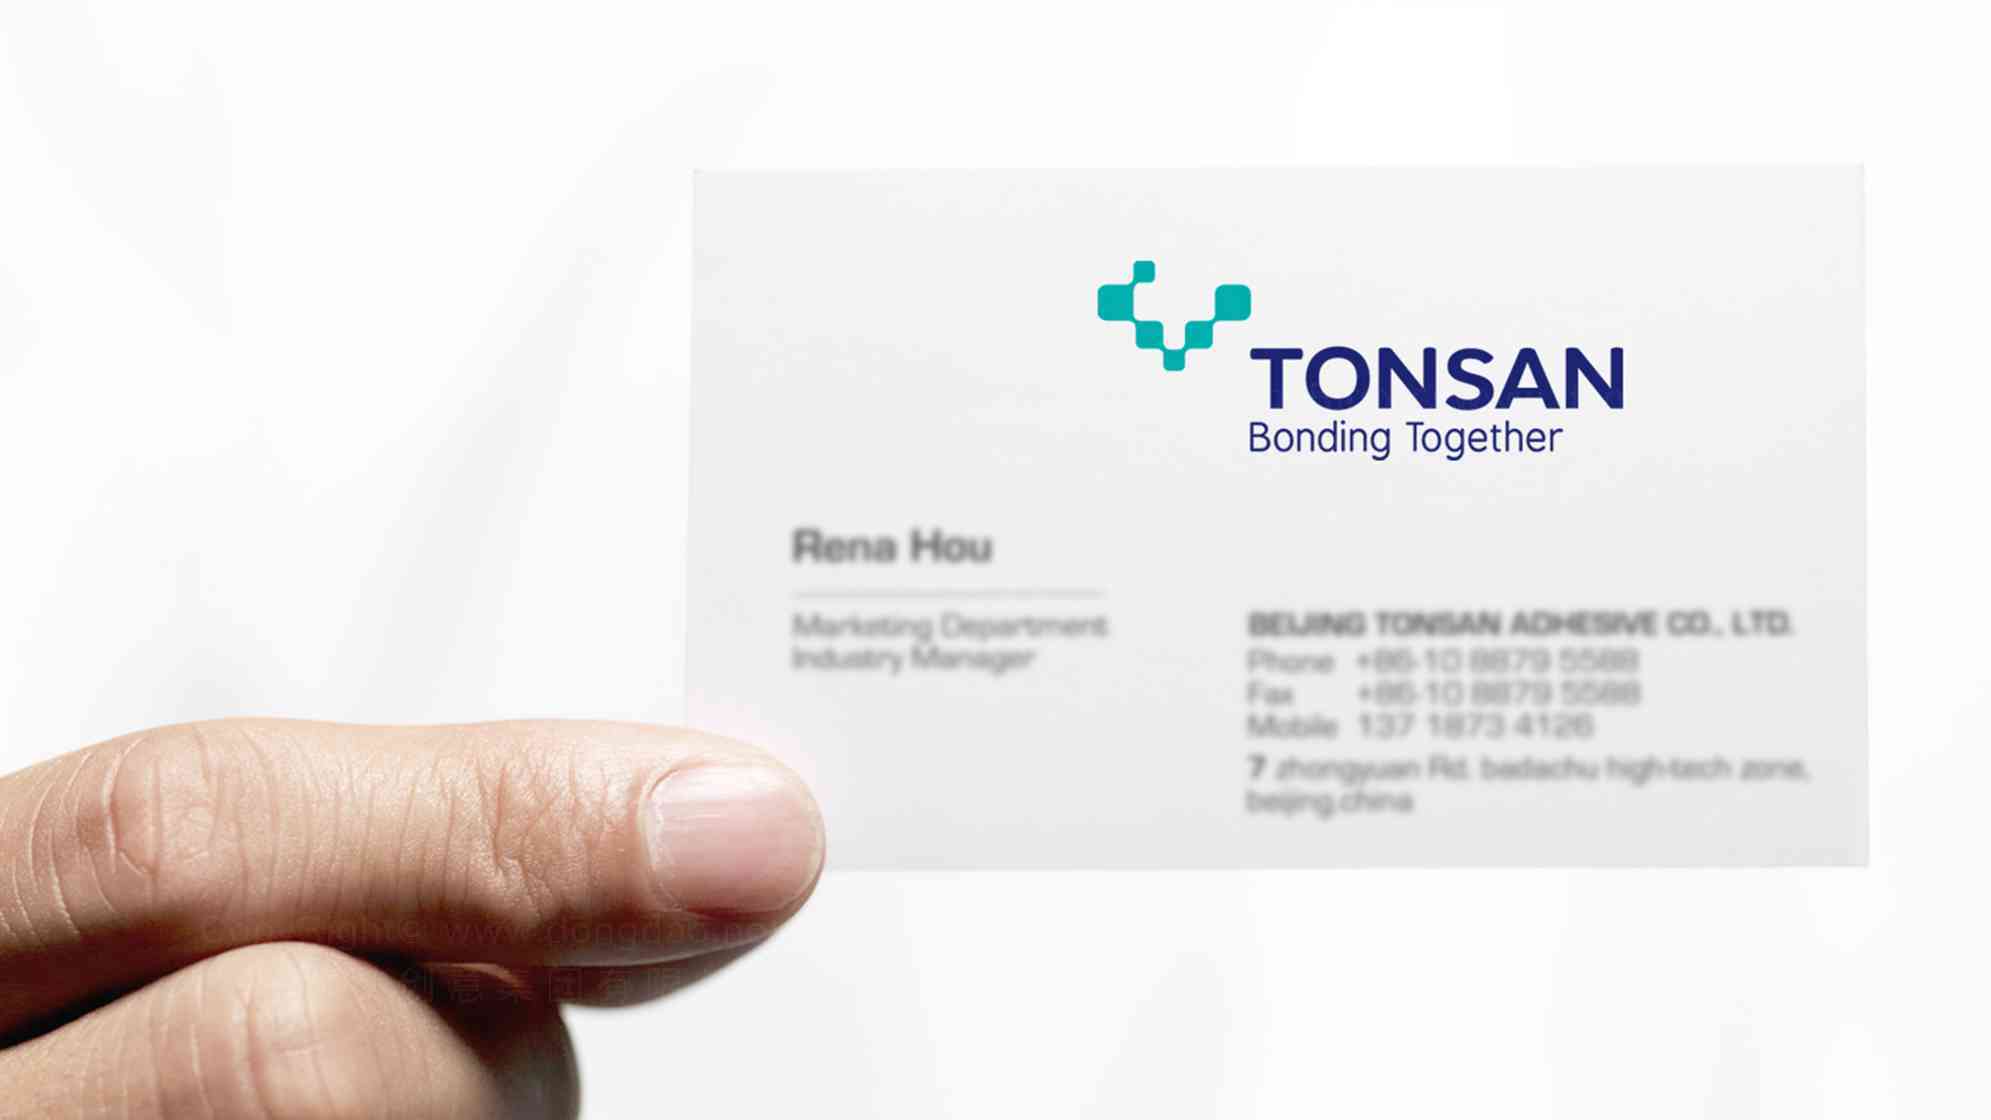 TONSAN工业胶水企业logo设计图片_TONSAN工业胶水工业logo设计图片素材